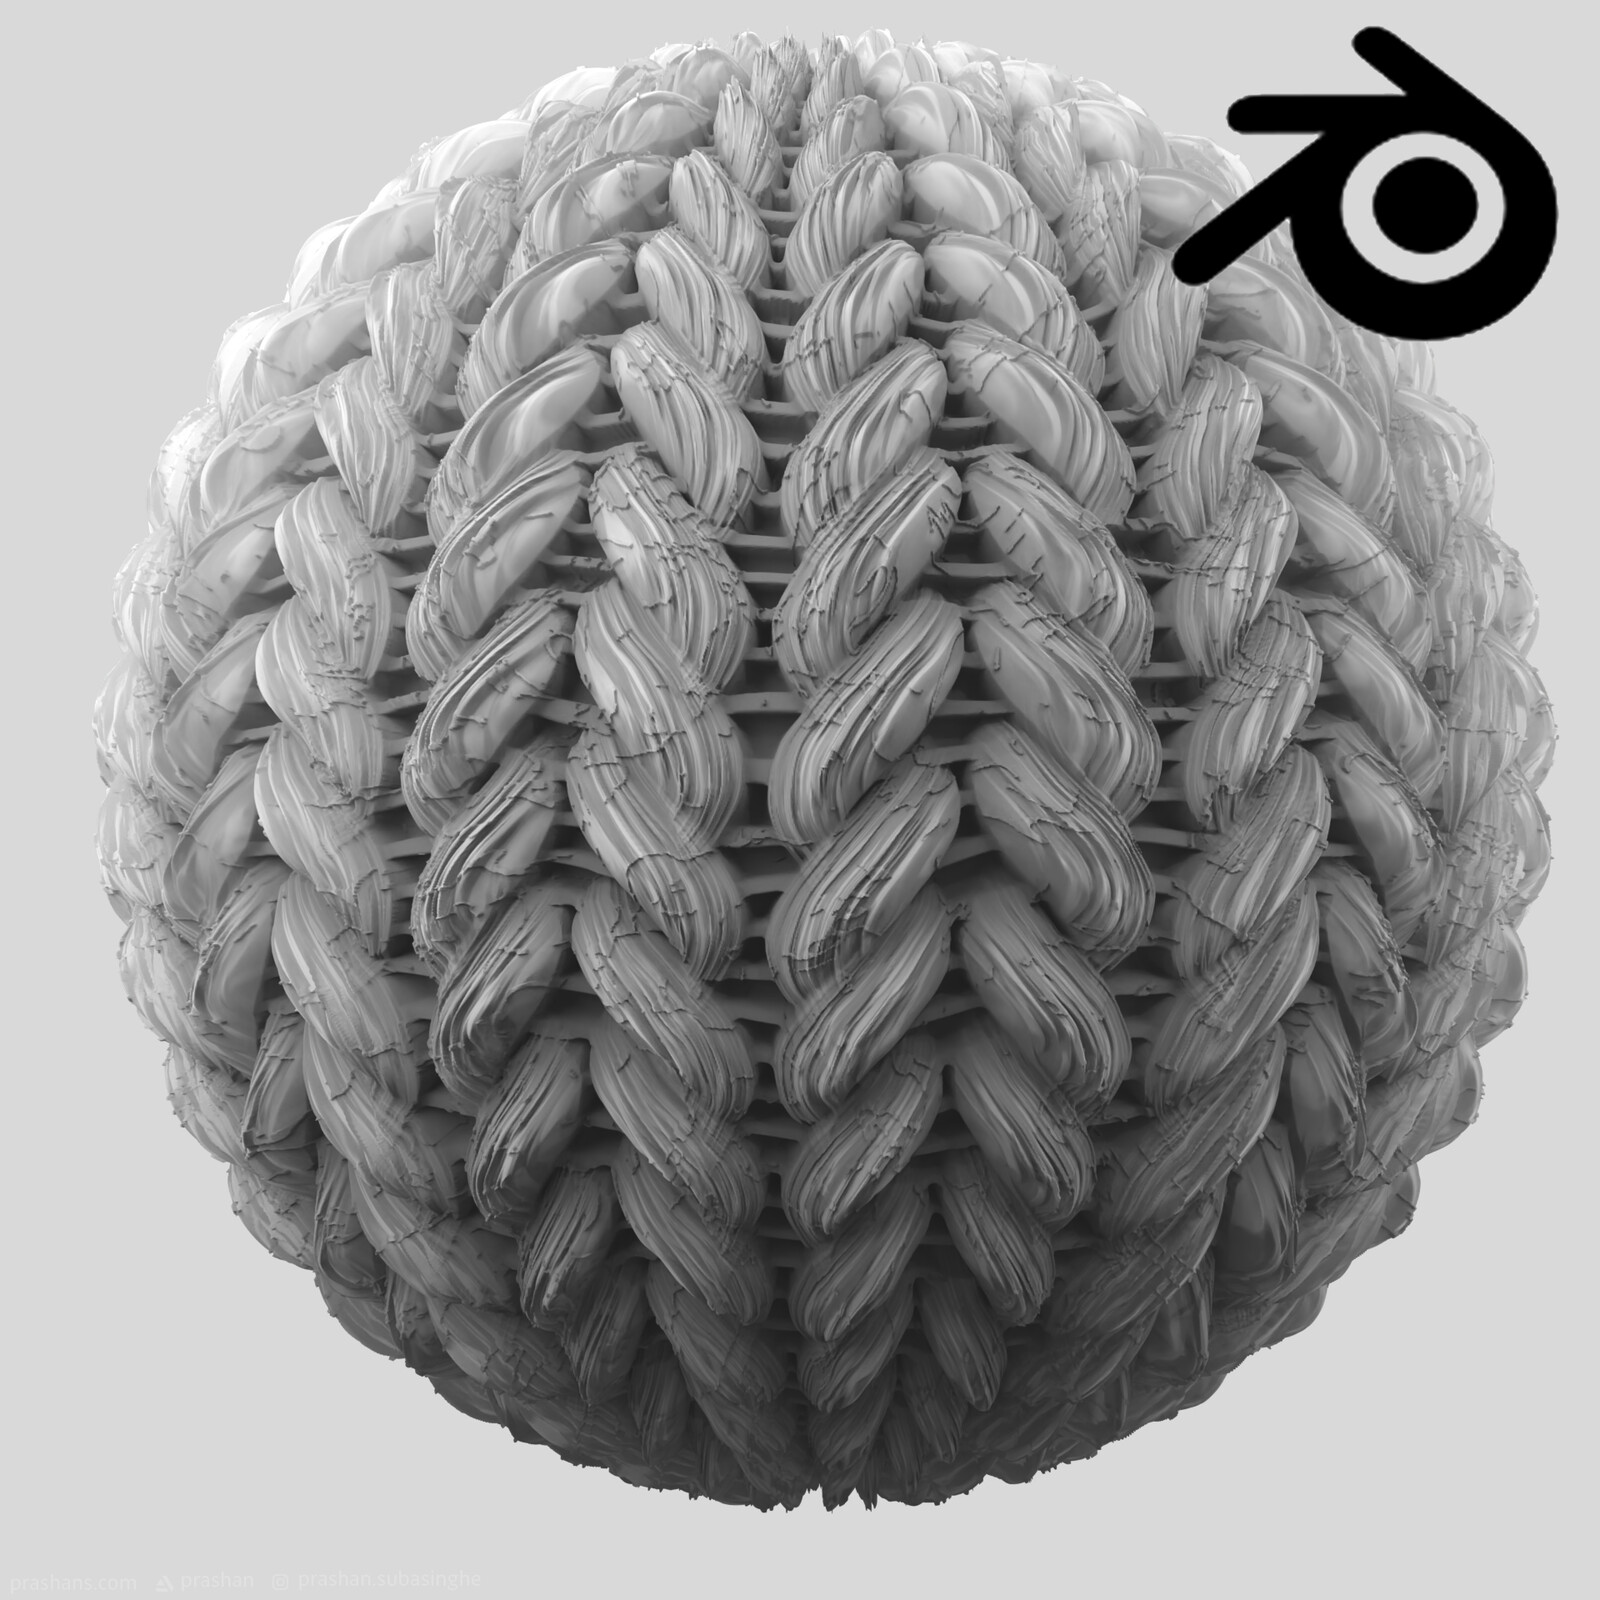 3D artist Prashan Subasinghe - Procedural Wool Shader